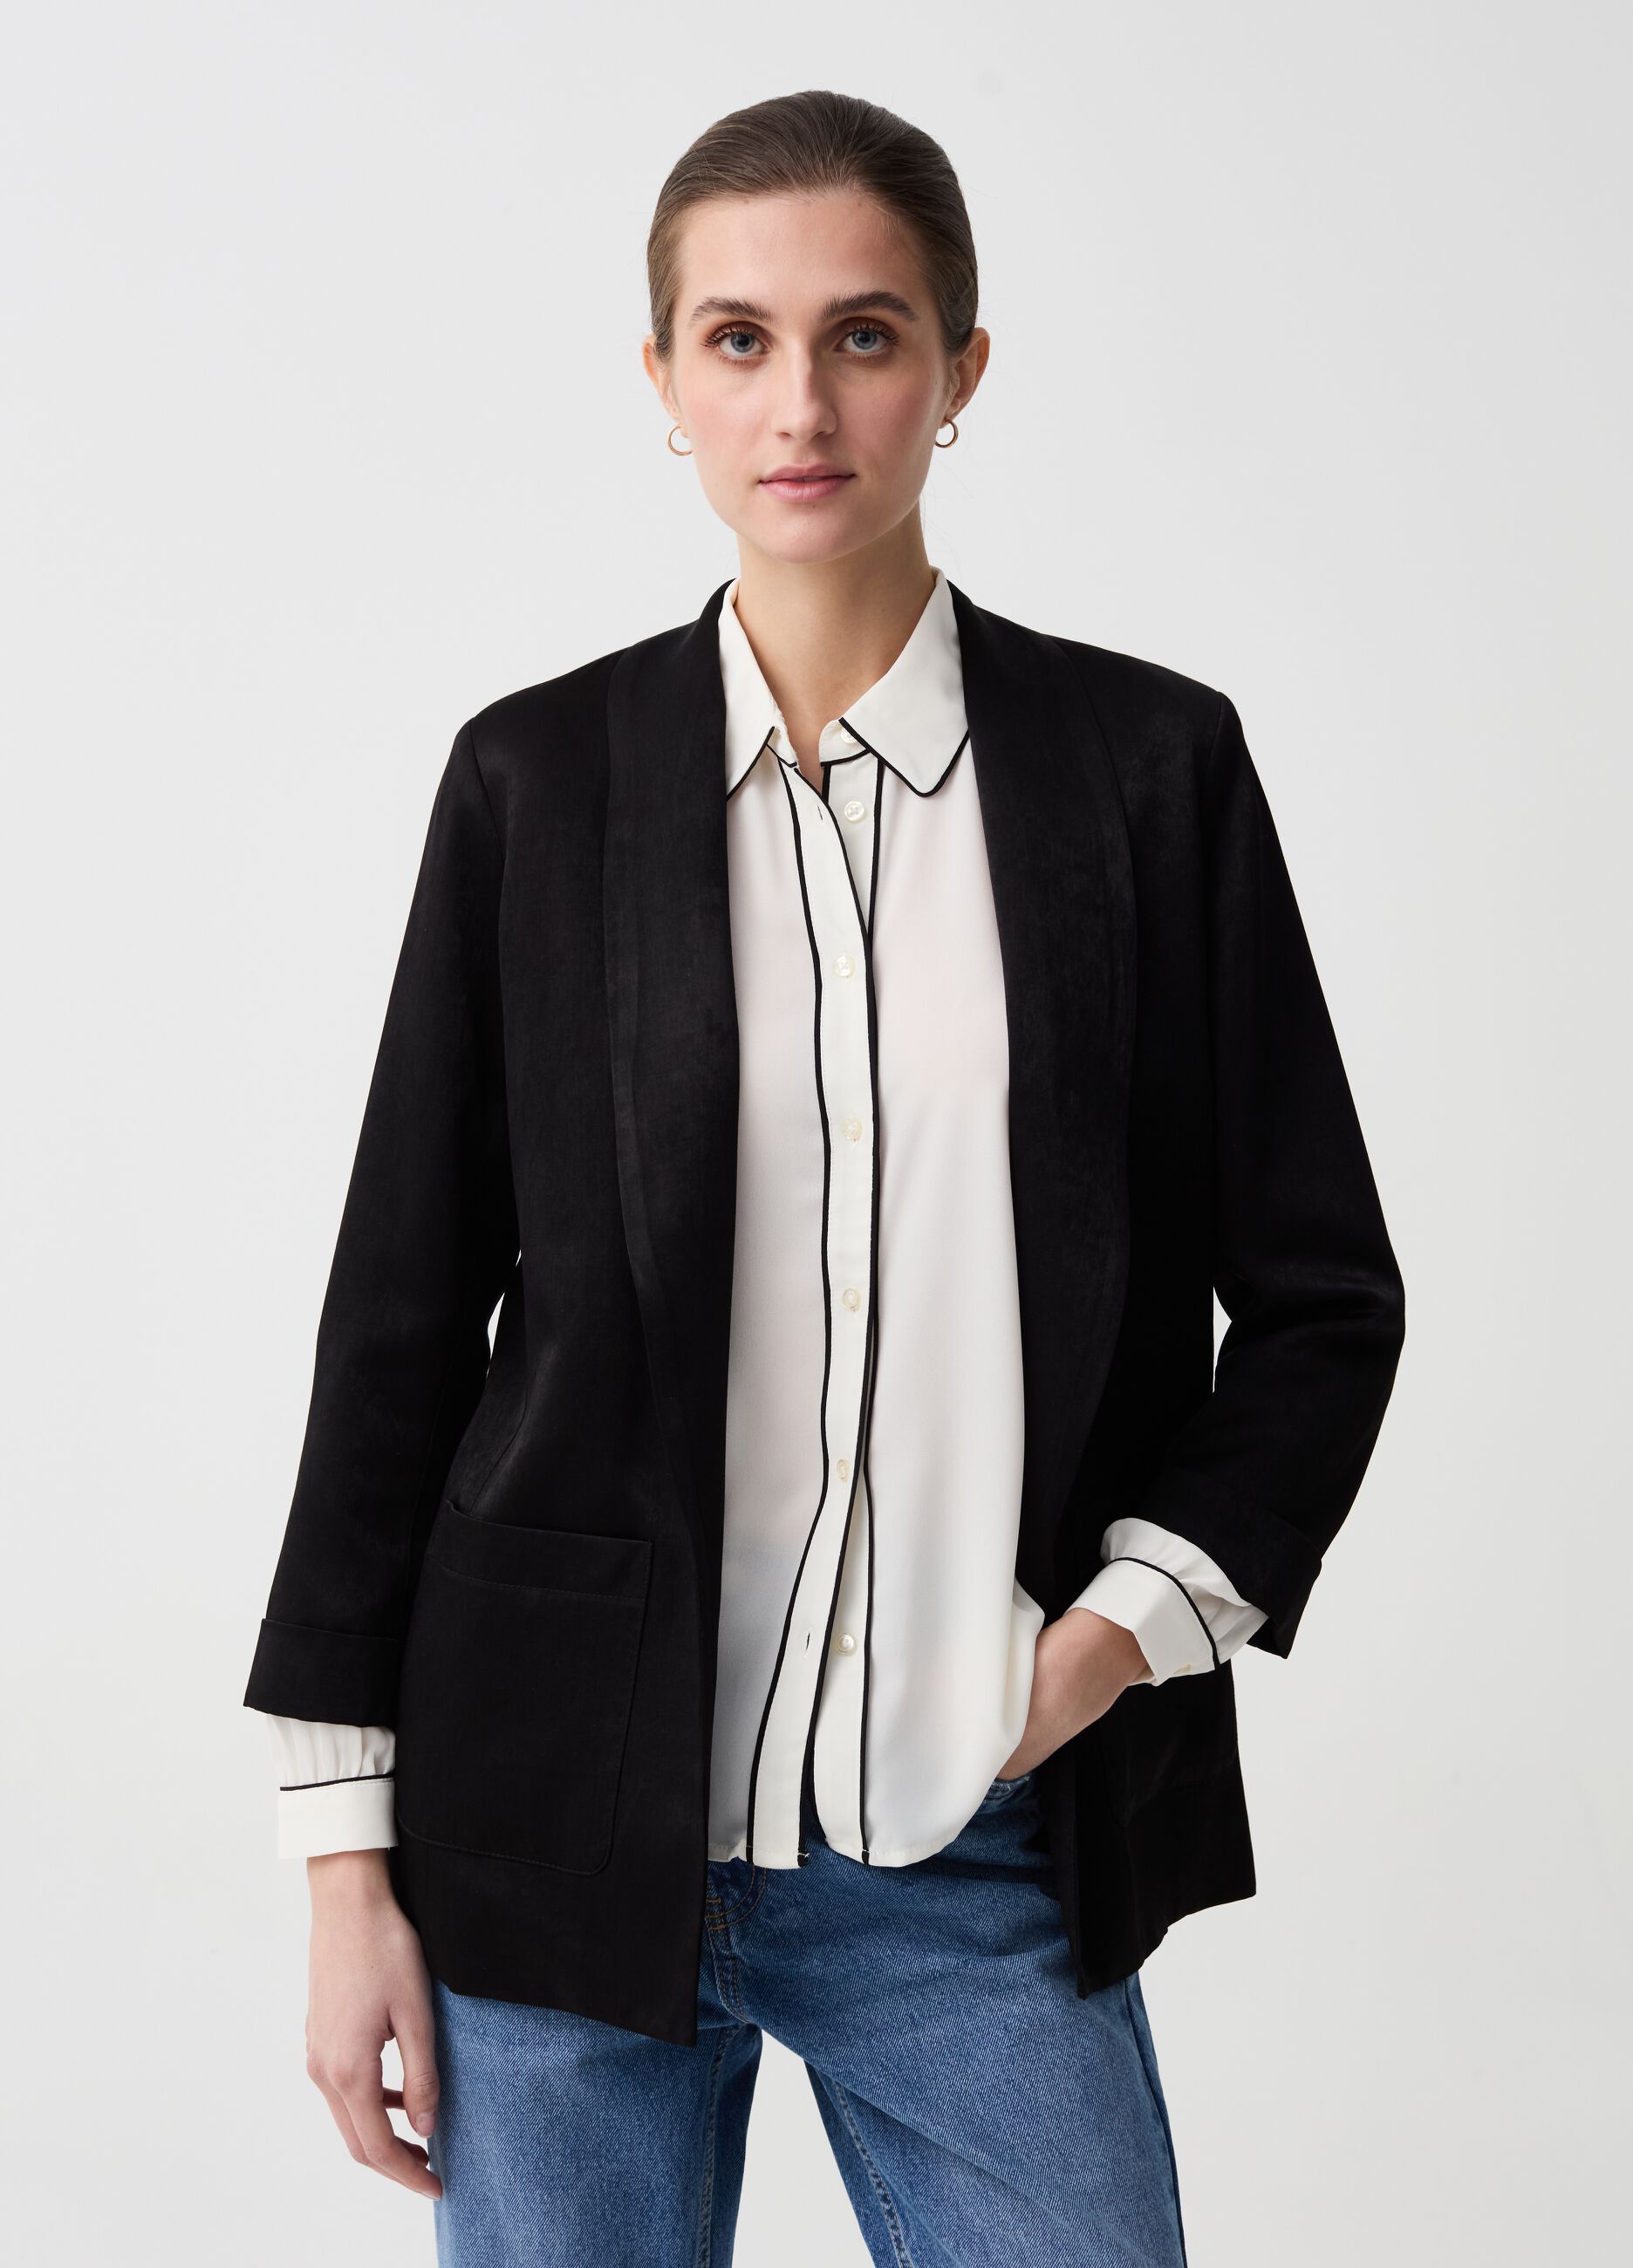 Open blazer with three-quarter sleeves